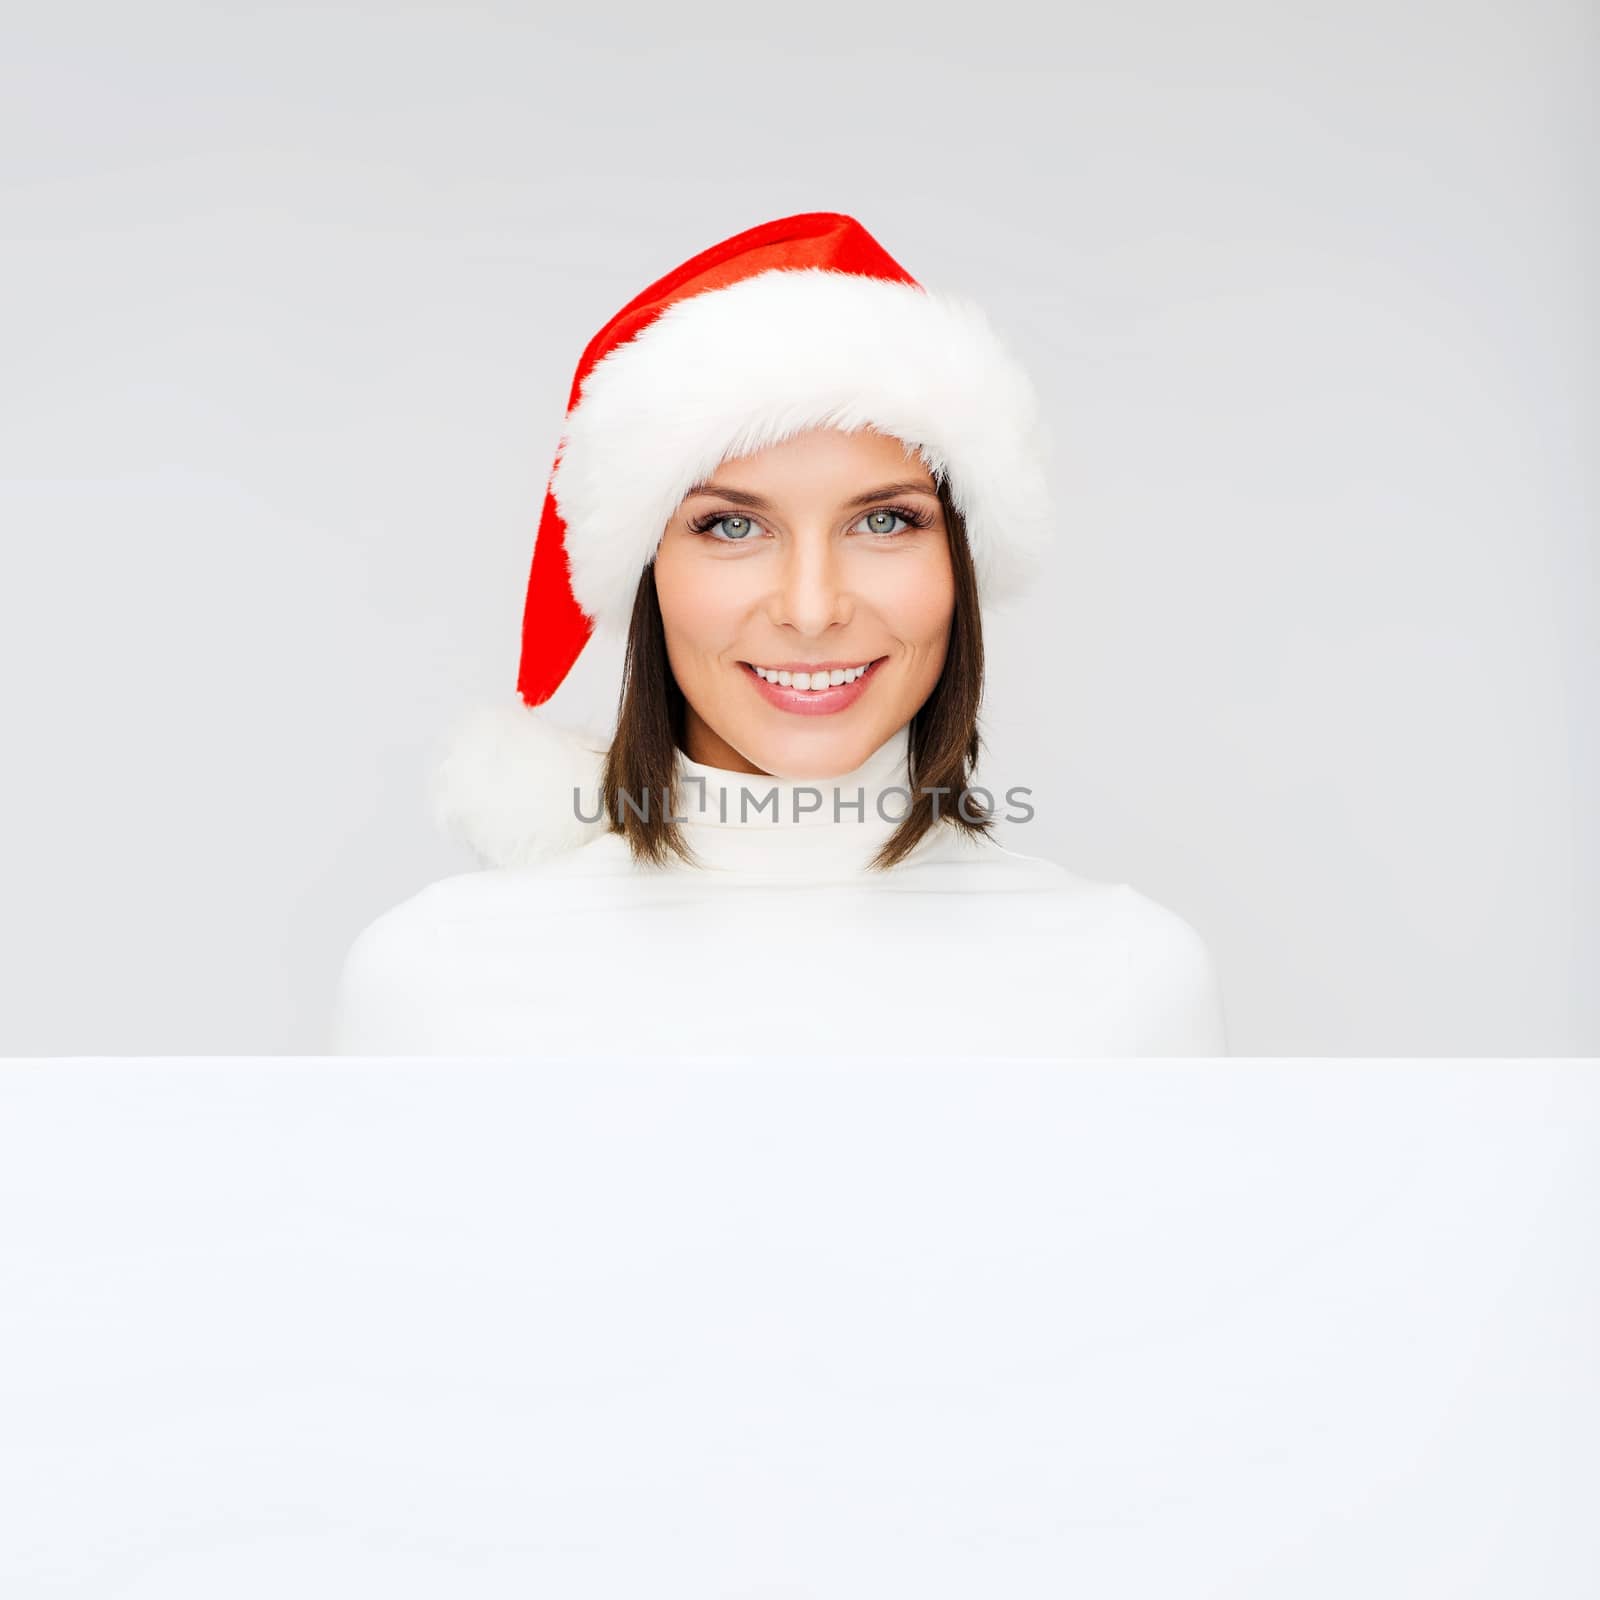 woman in santa helper hat with blank white board by dolgachov